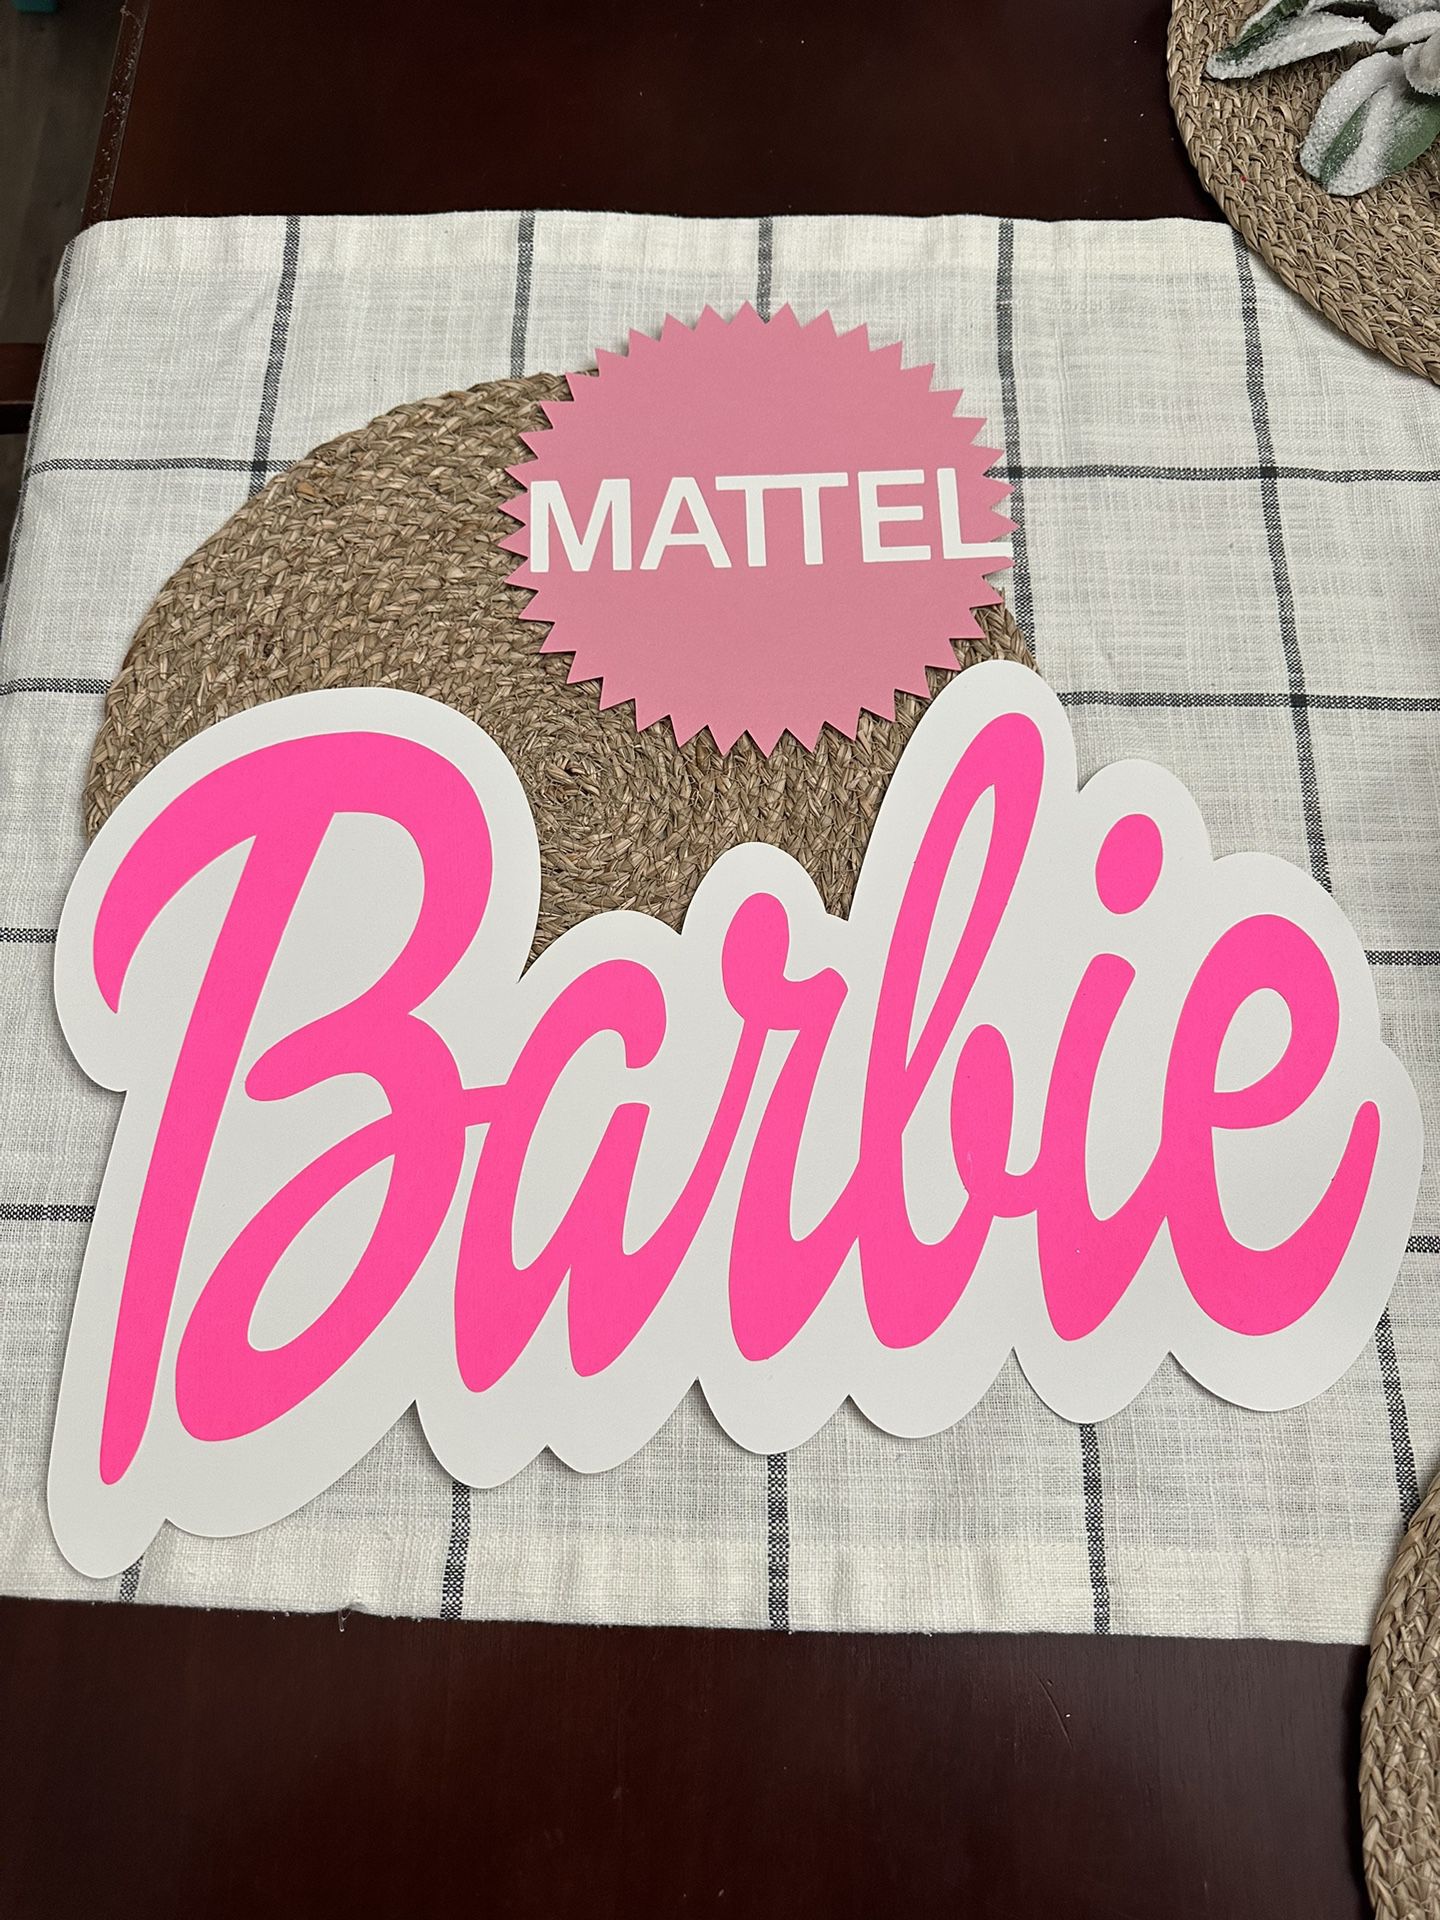 Barbie Logo Sign